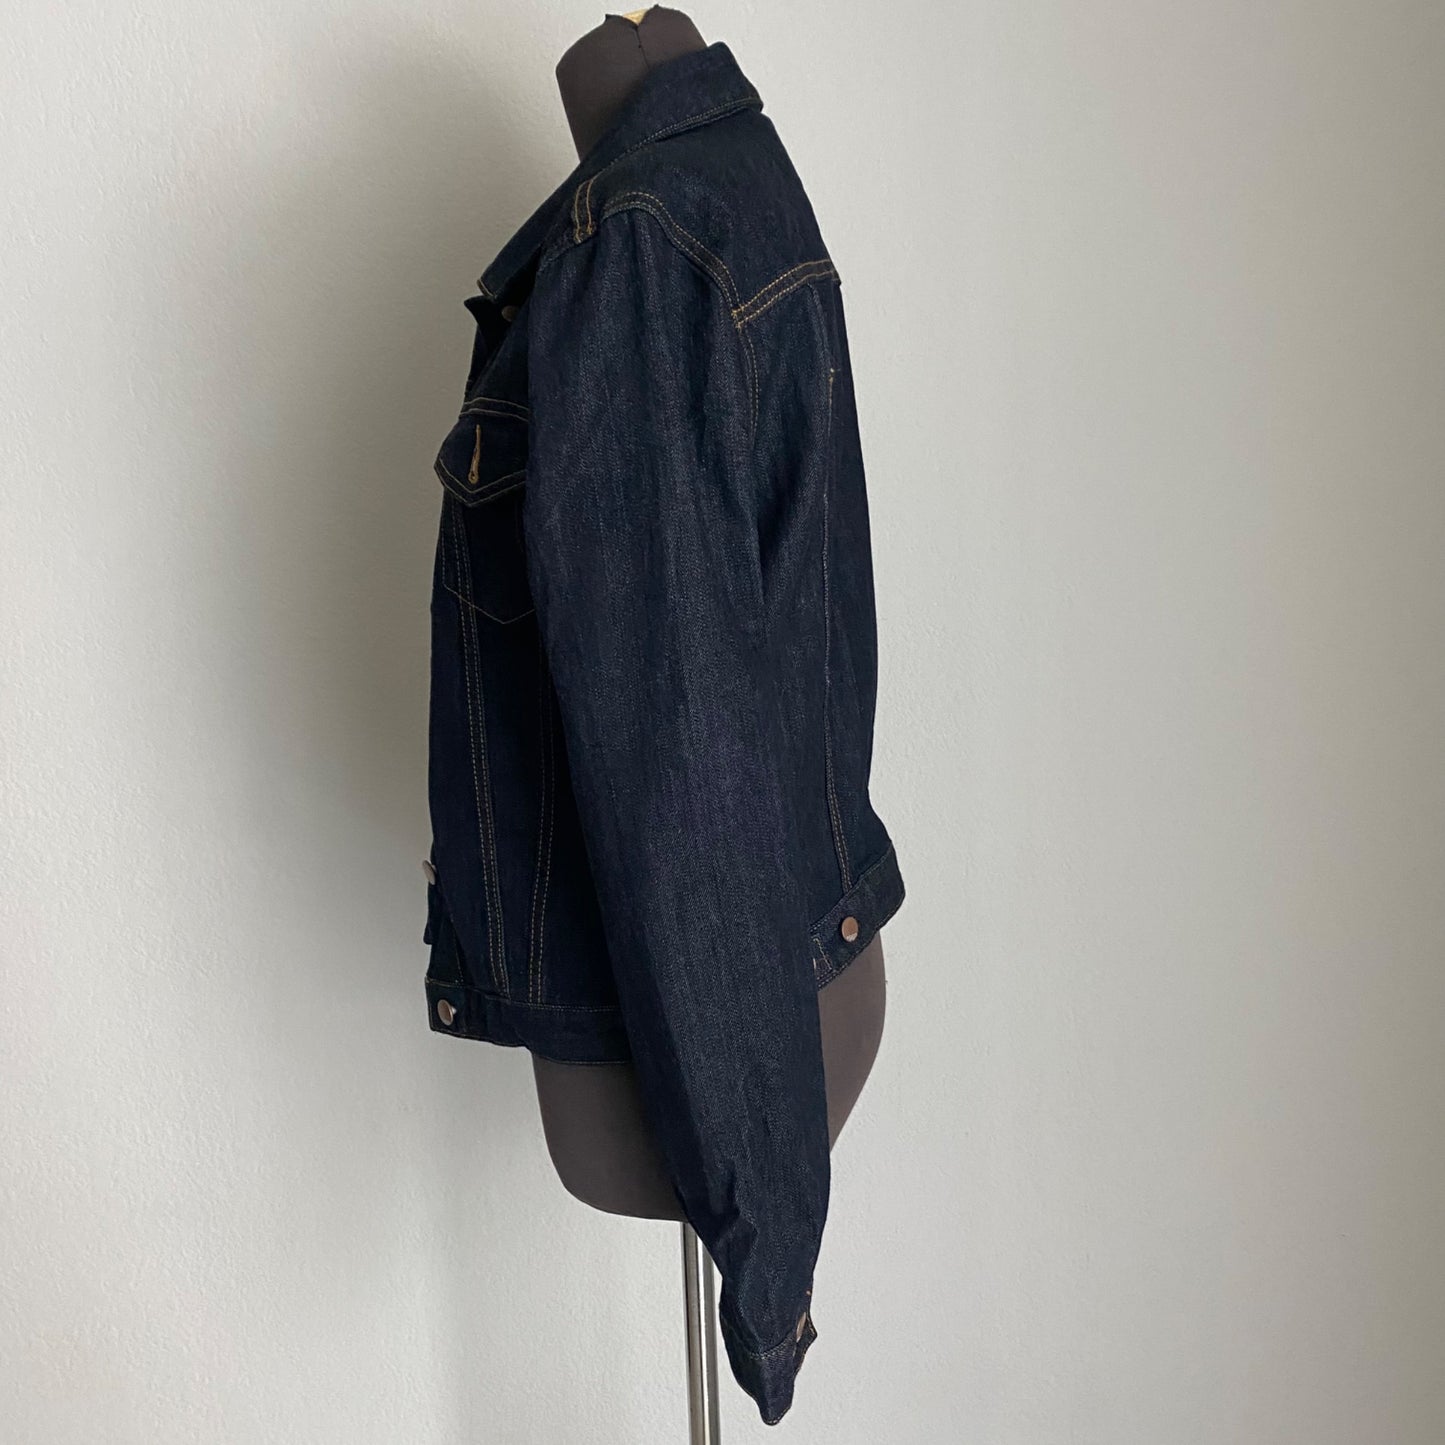 Gap 1969 sz S Long sleeve blue jean button dark collared jacket